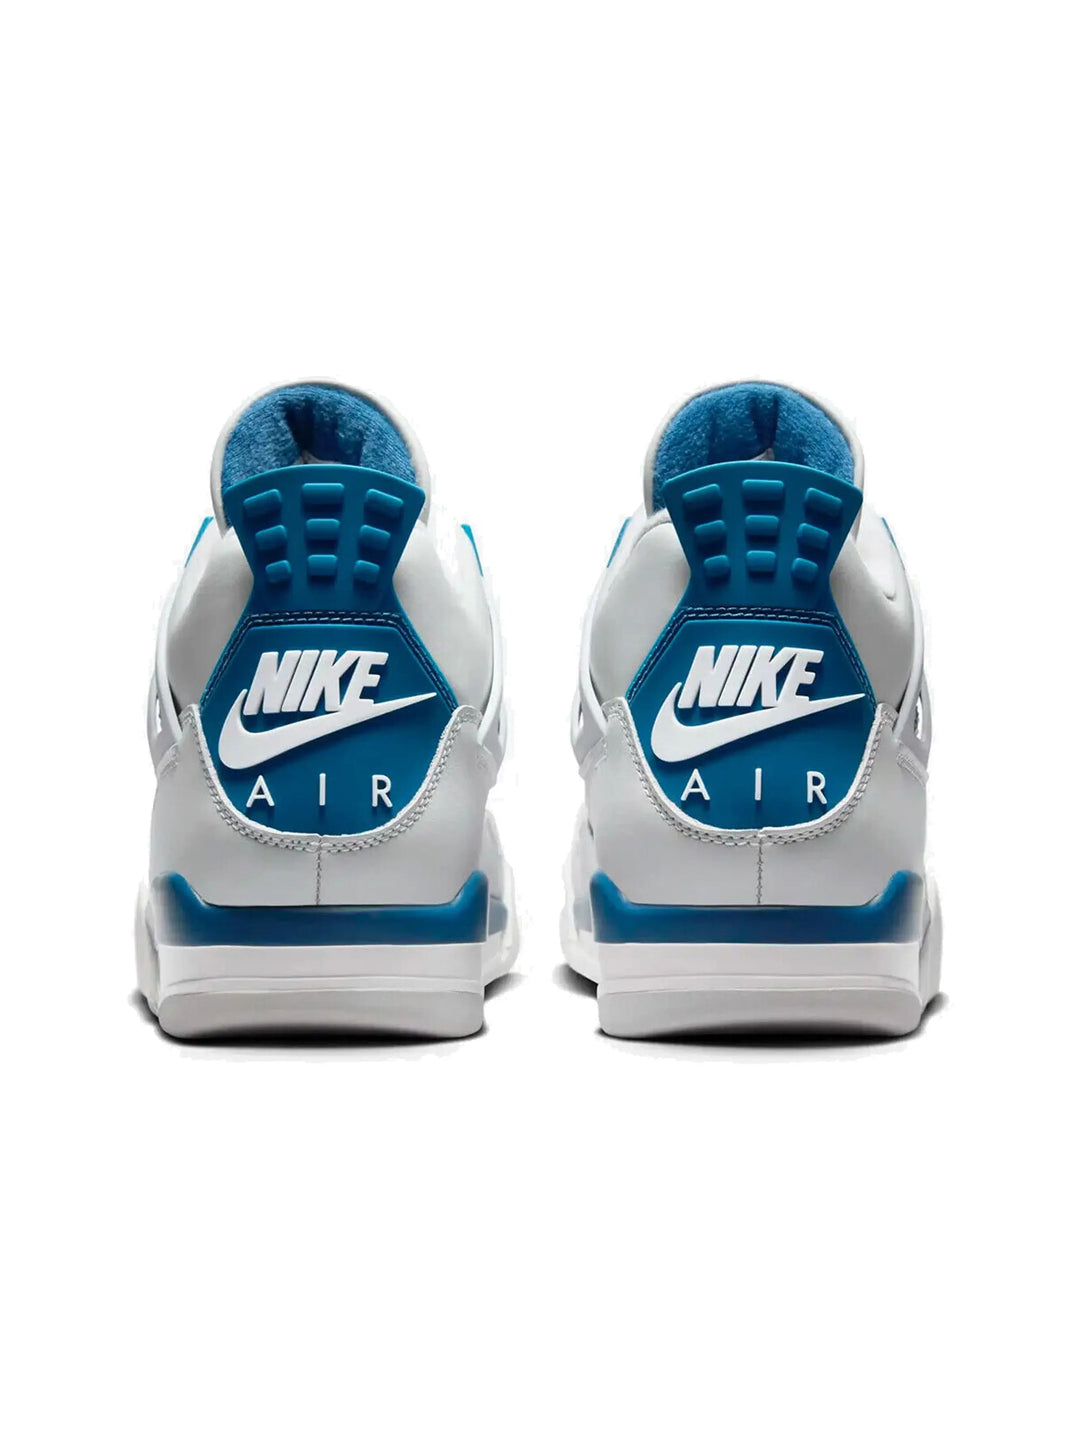 Nike Air Jordan 4 Retro Military Blue (2024) in Auckland, New Zealand - Shop name